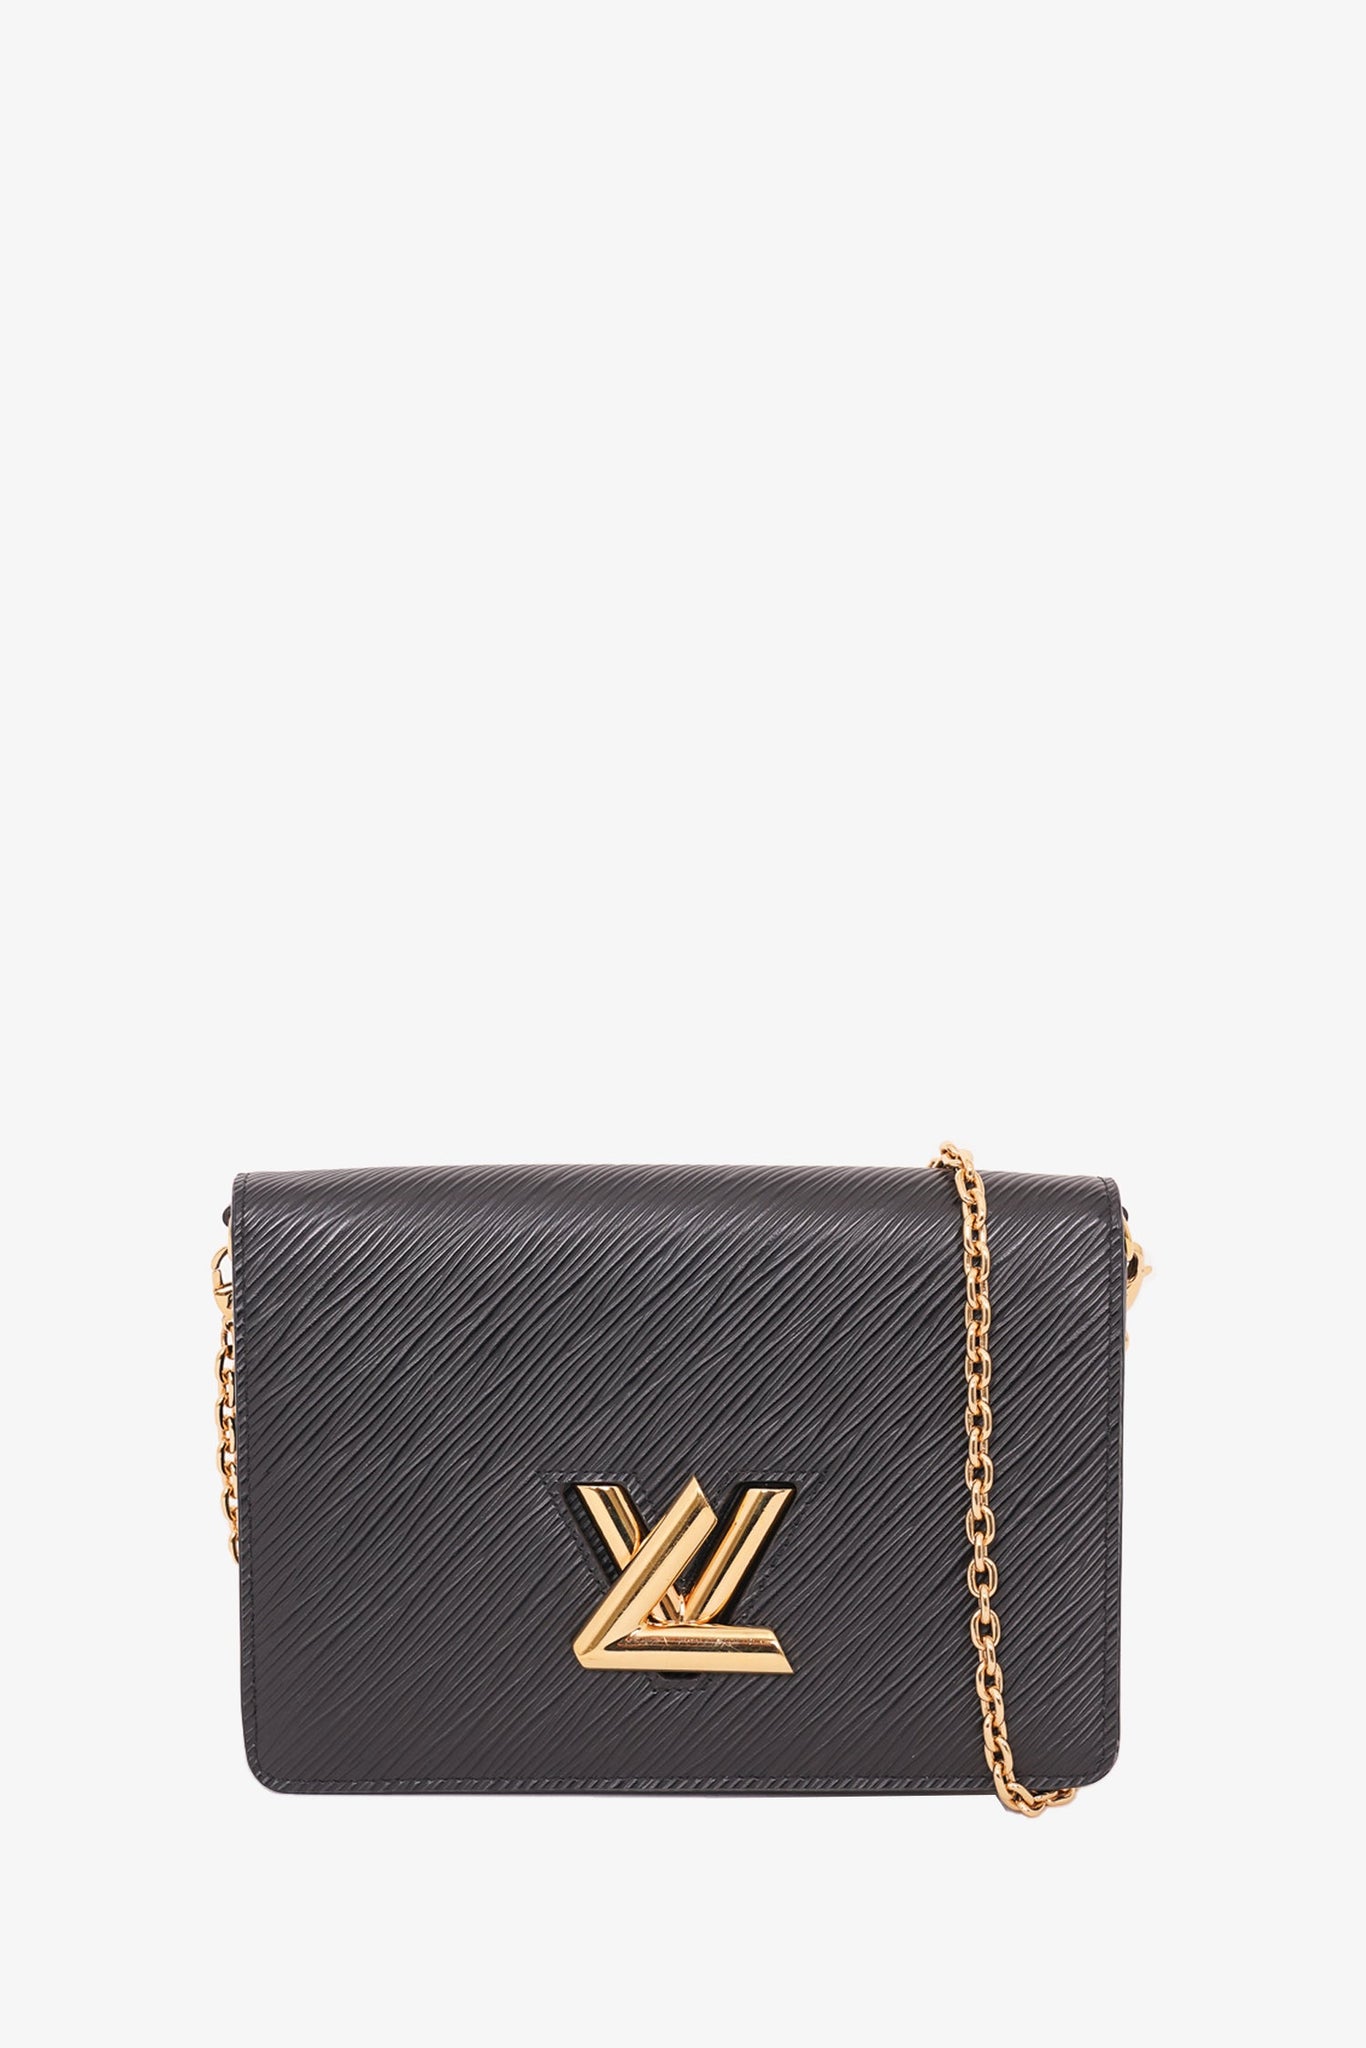 Louis Vuitton Twist Chain Wallet Epi Leather with Sequins - ShopStyle